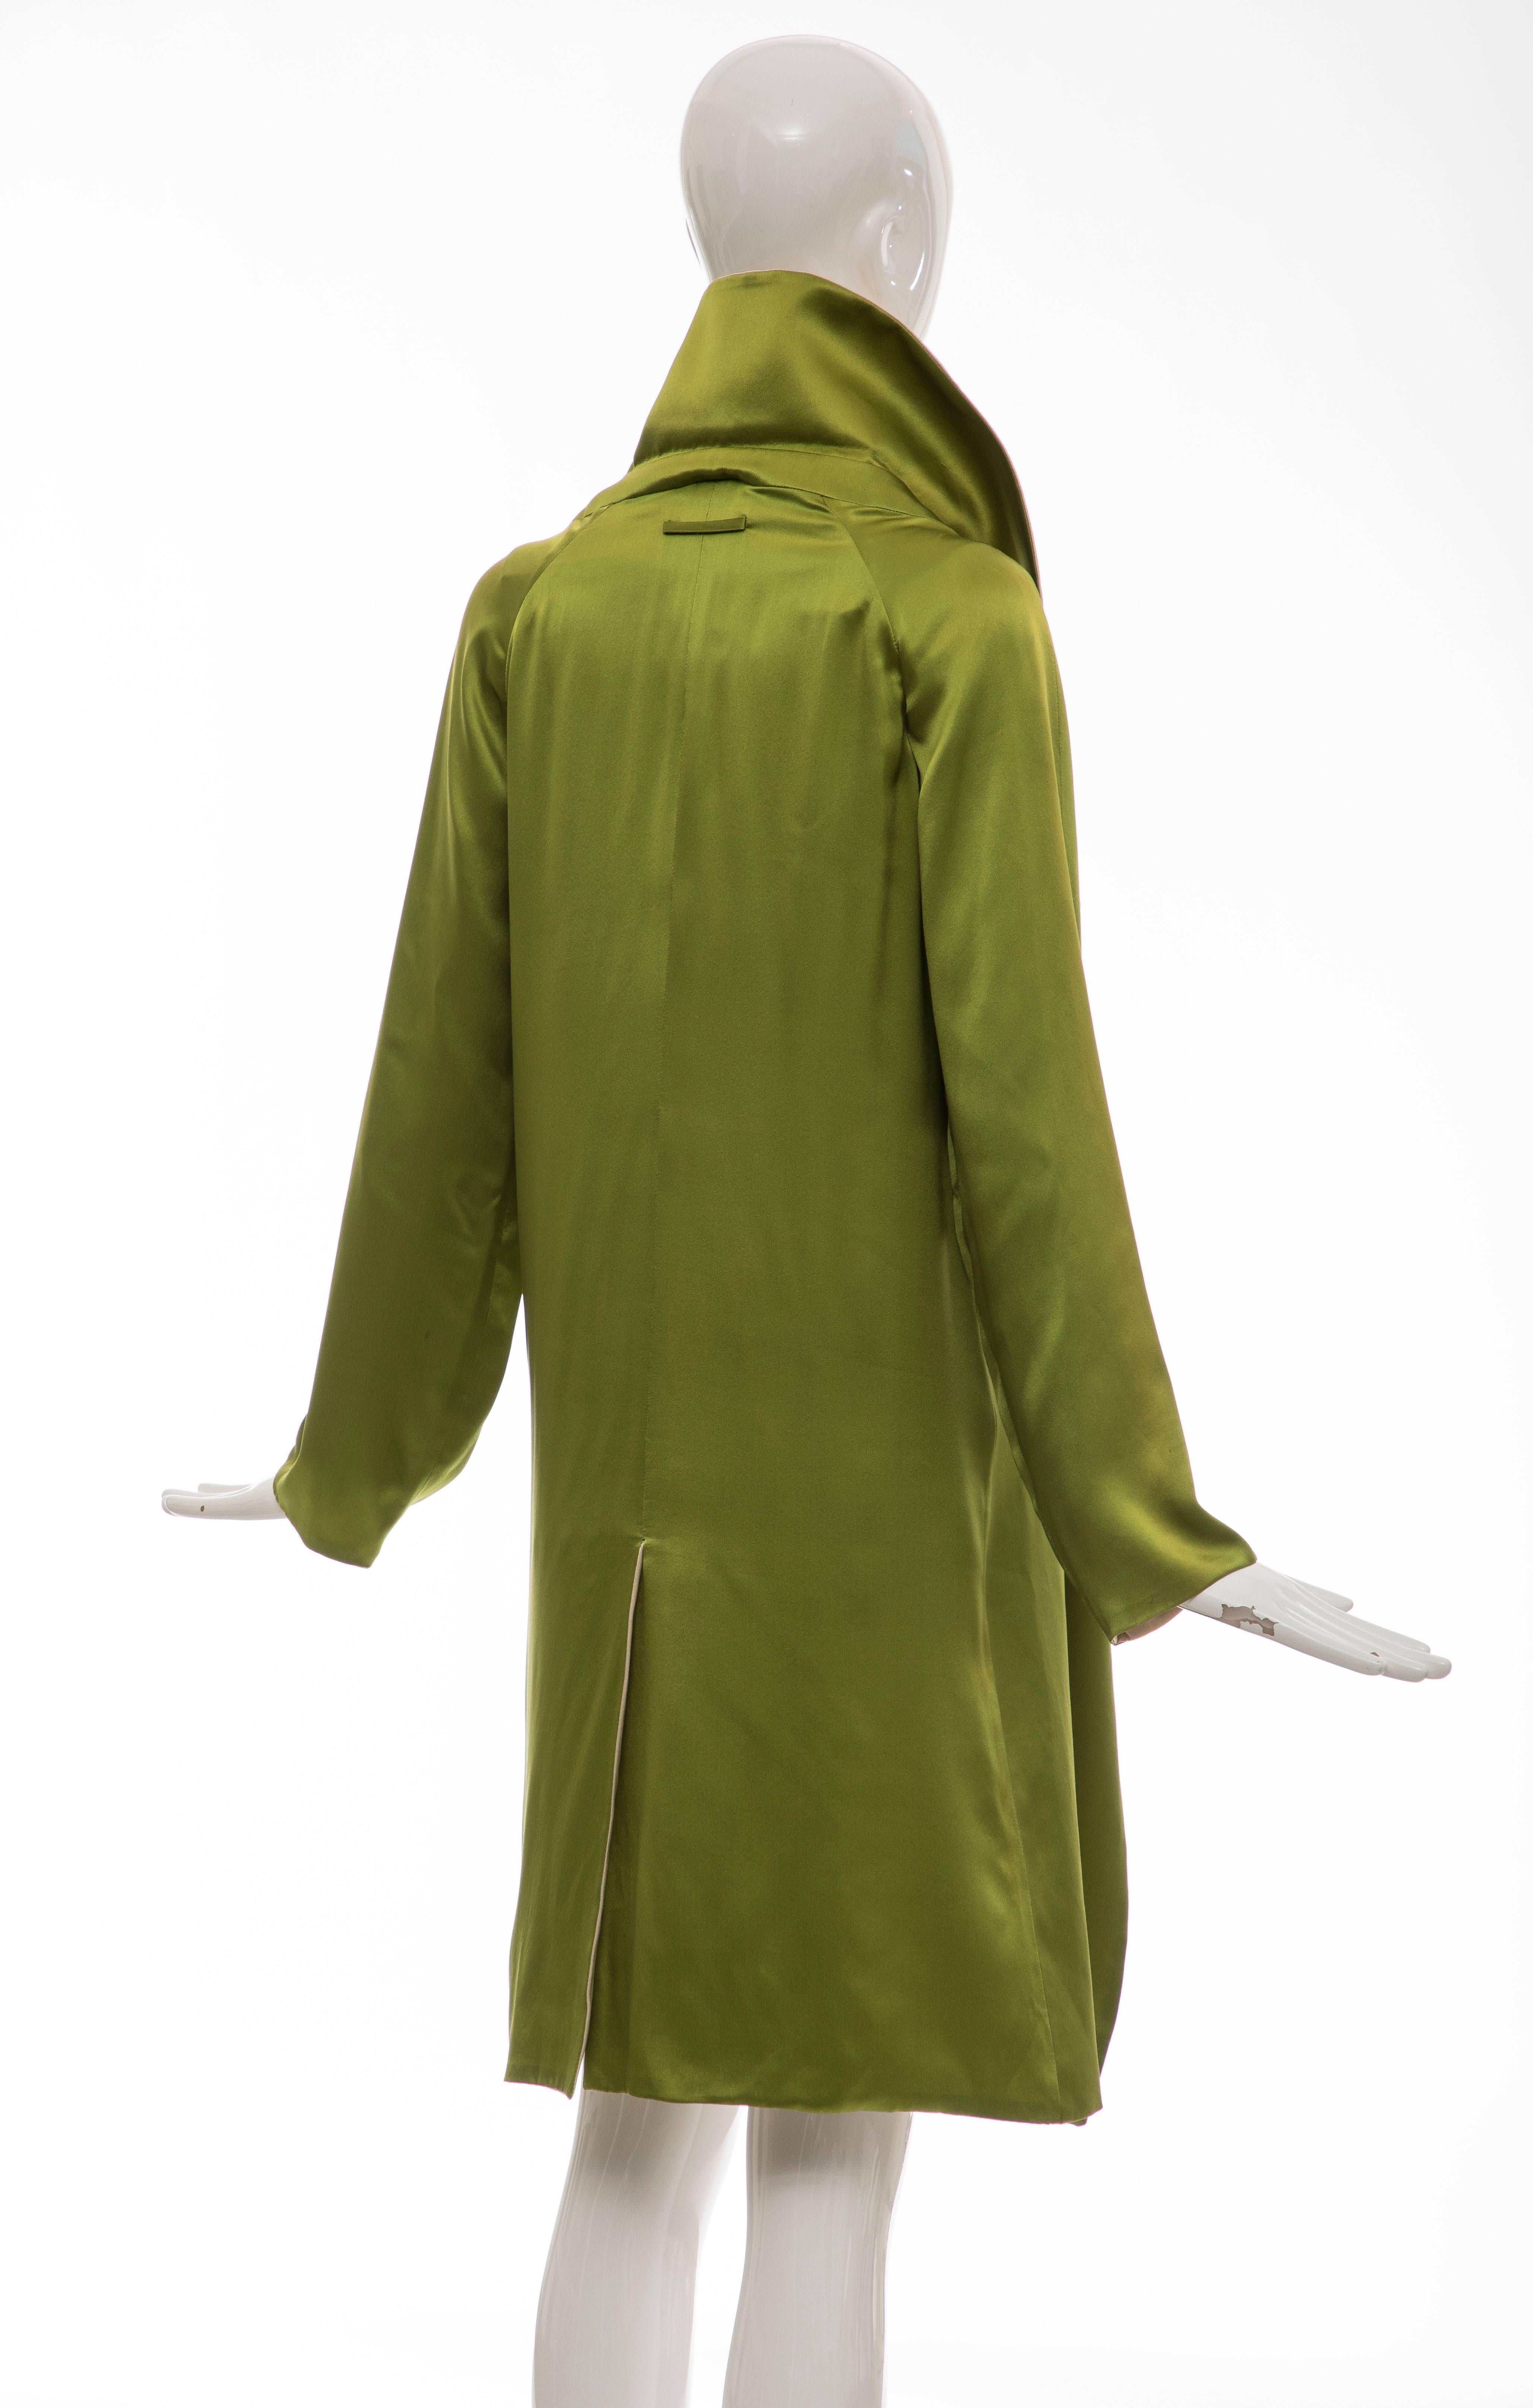 Jean Paul Gaultier Silk Charmeuse Dress Coat, Fall 2010 2